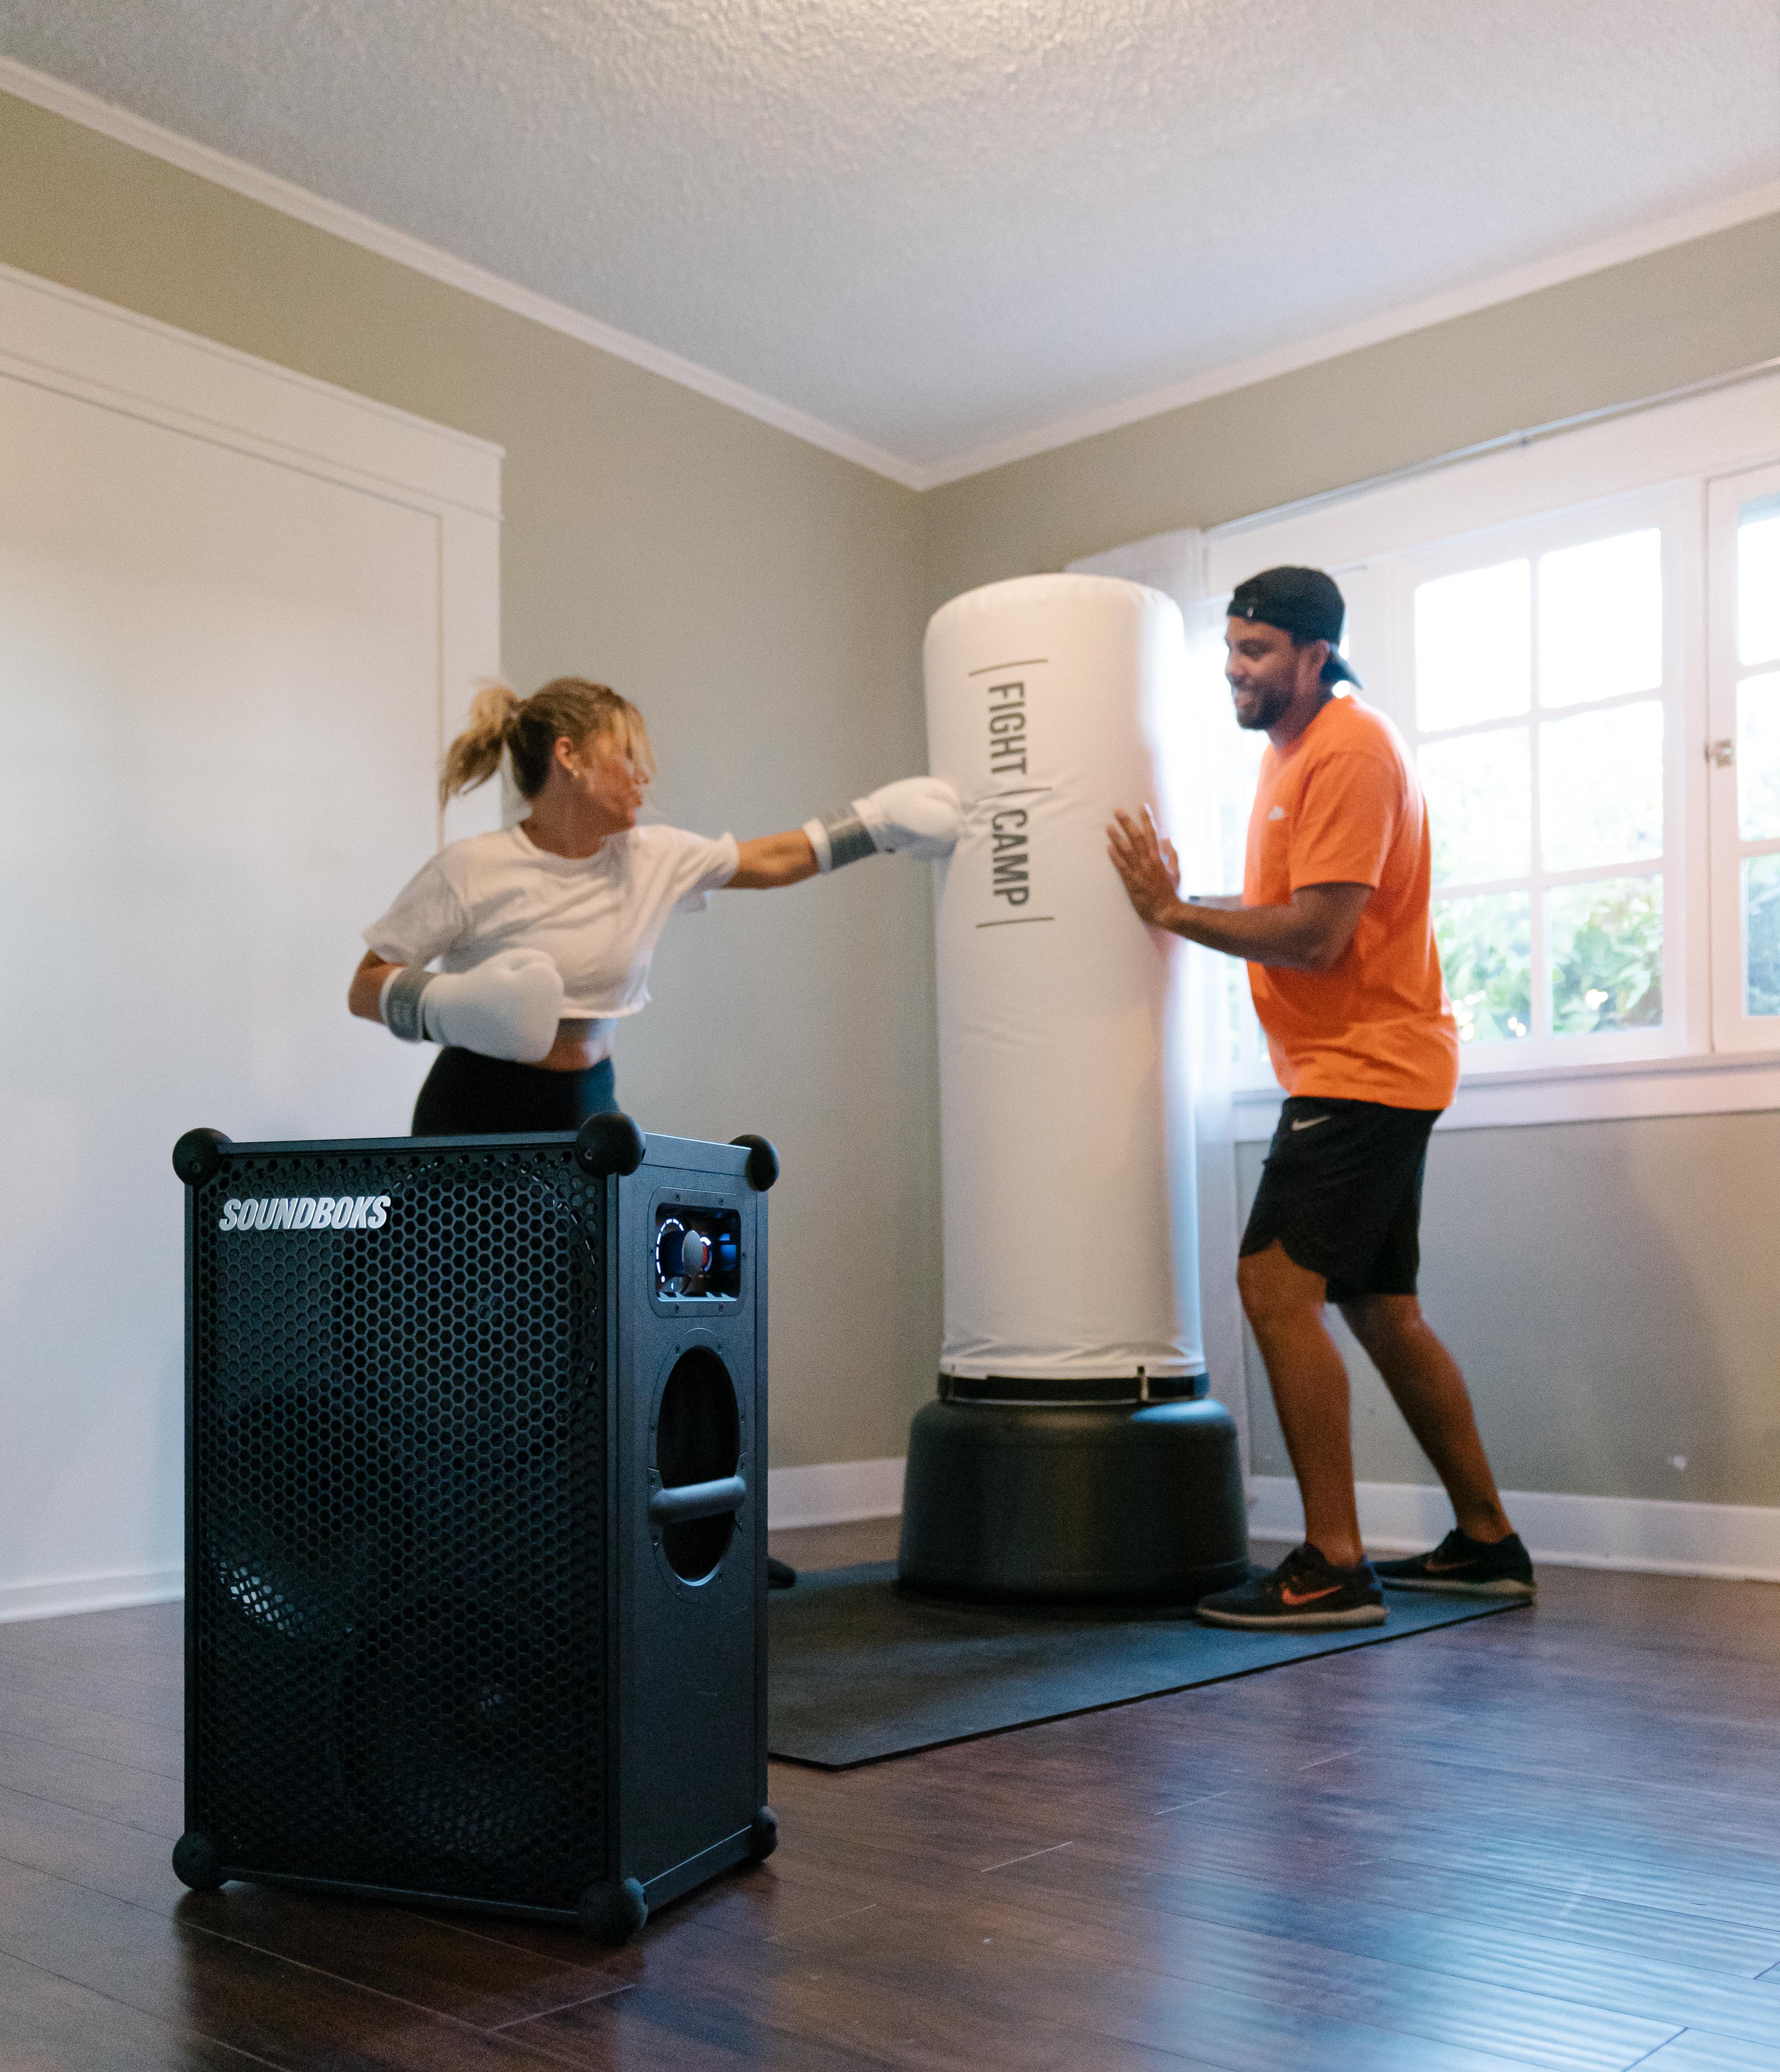 SOUNDBOKS portable bluetooth speaker in a home gym setup